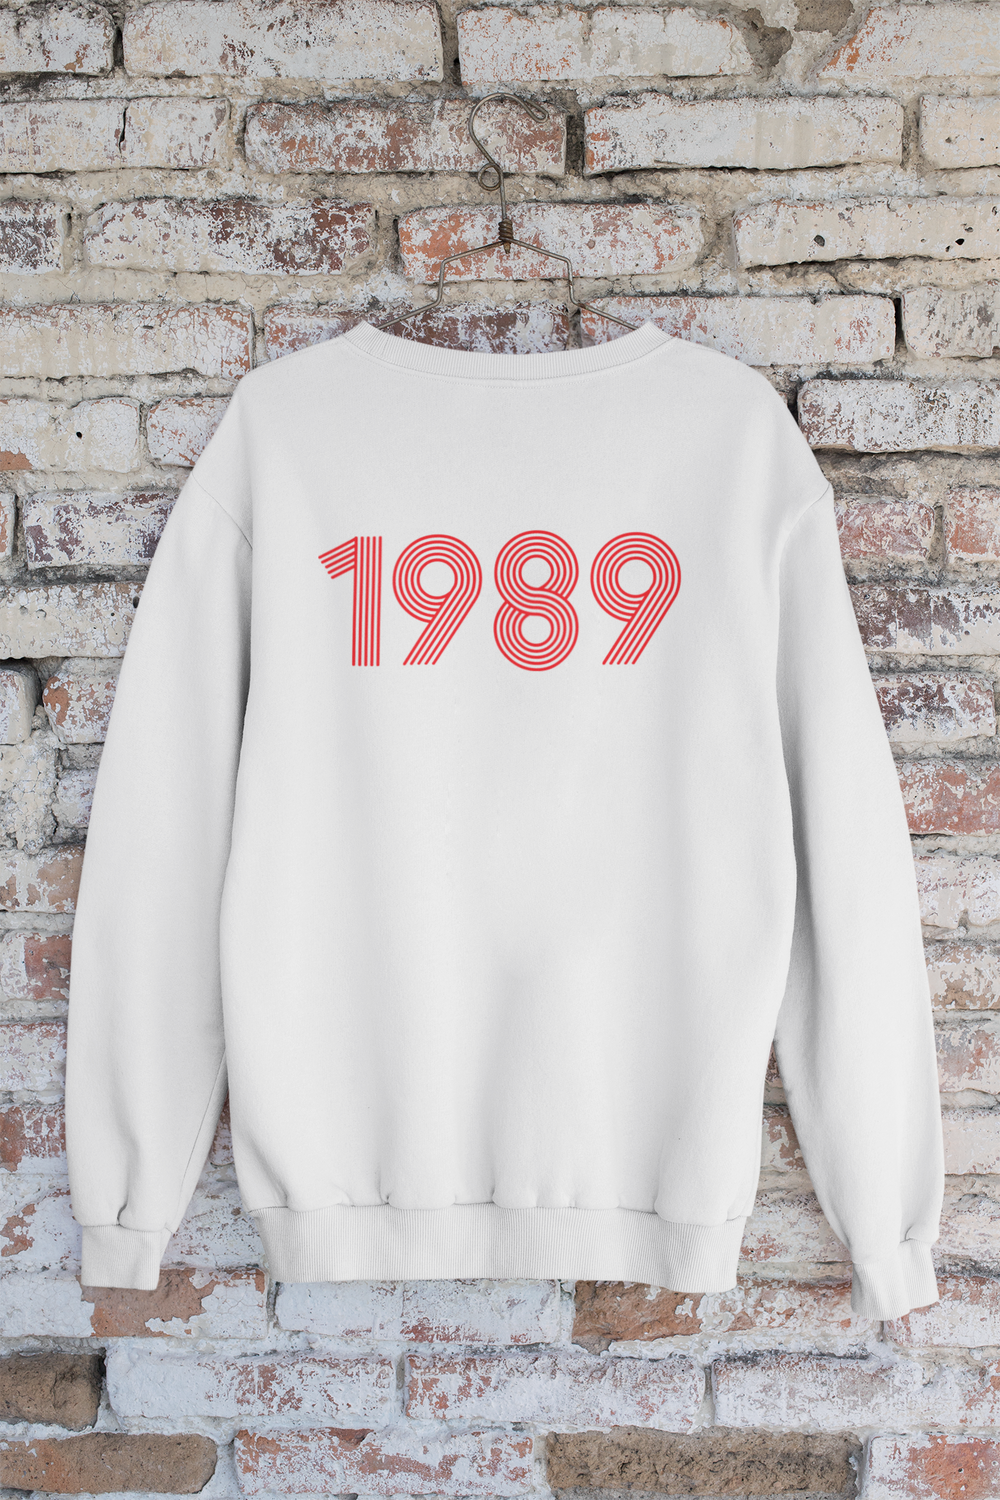 1989 Retro Red Unisex Sweater - TalkPeng